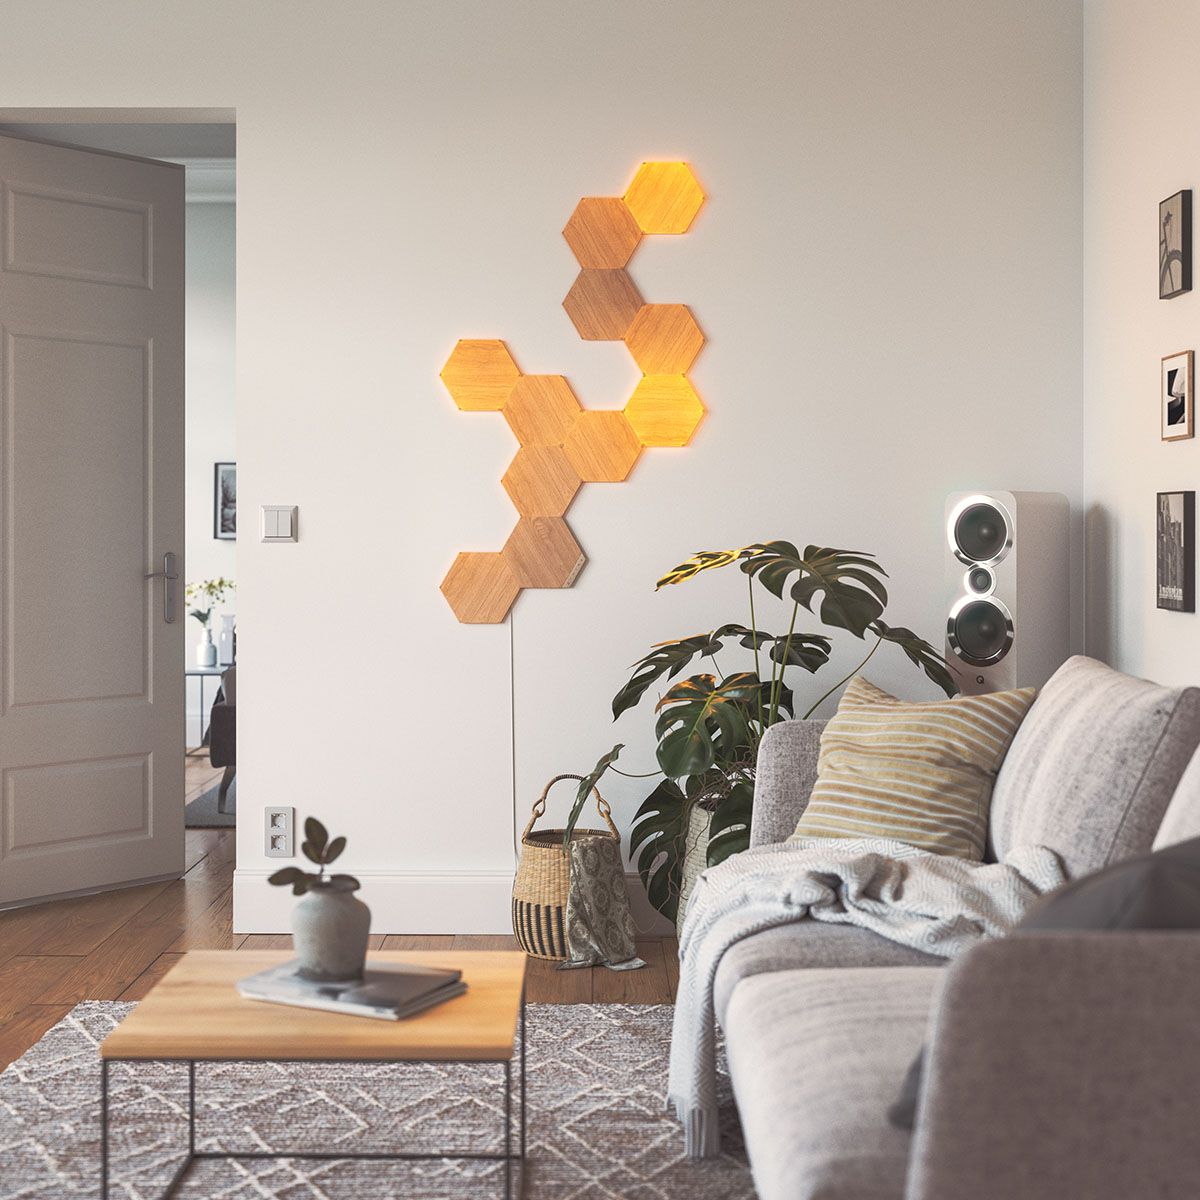 Kit de 7 hexagones muraux lumineux design ELEMENTS